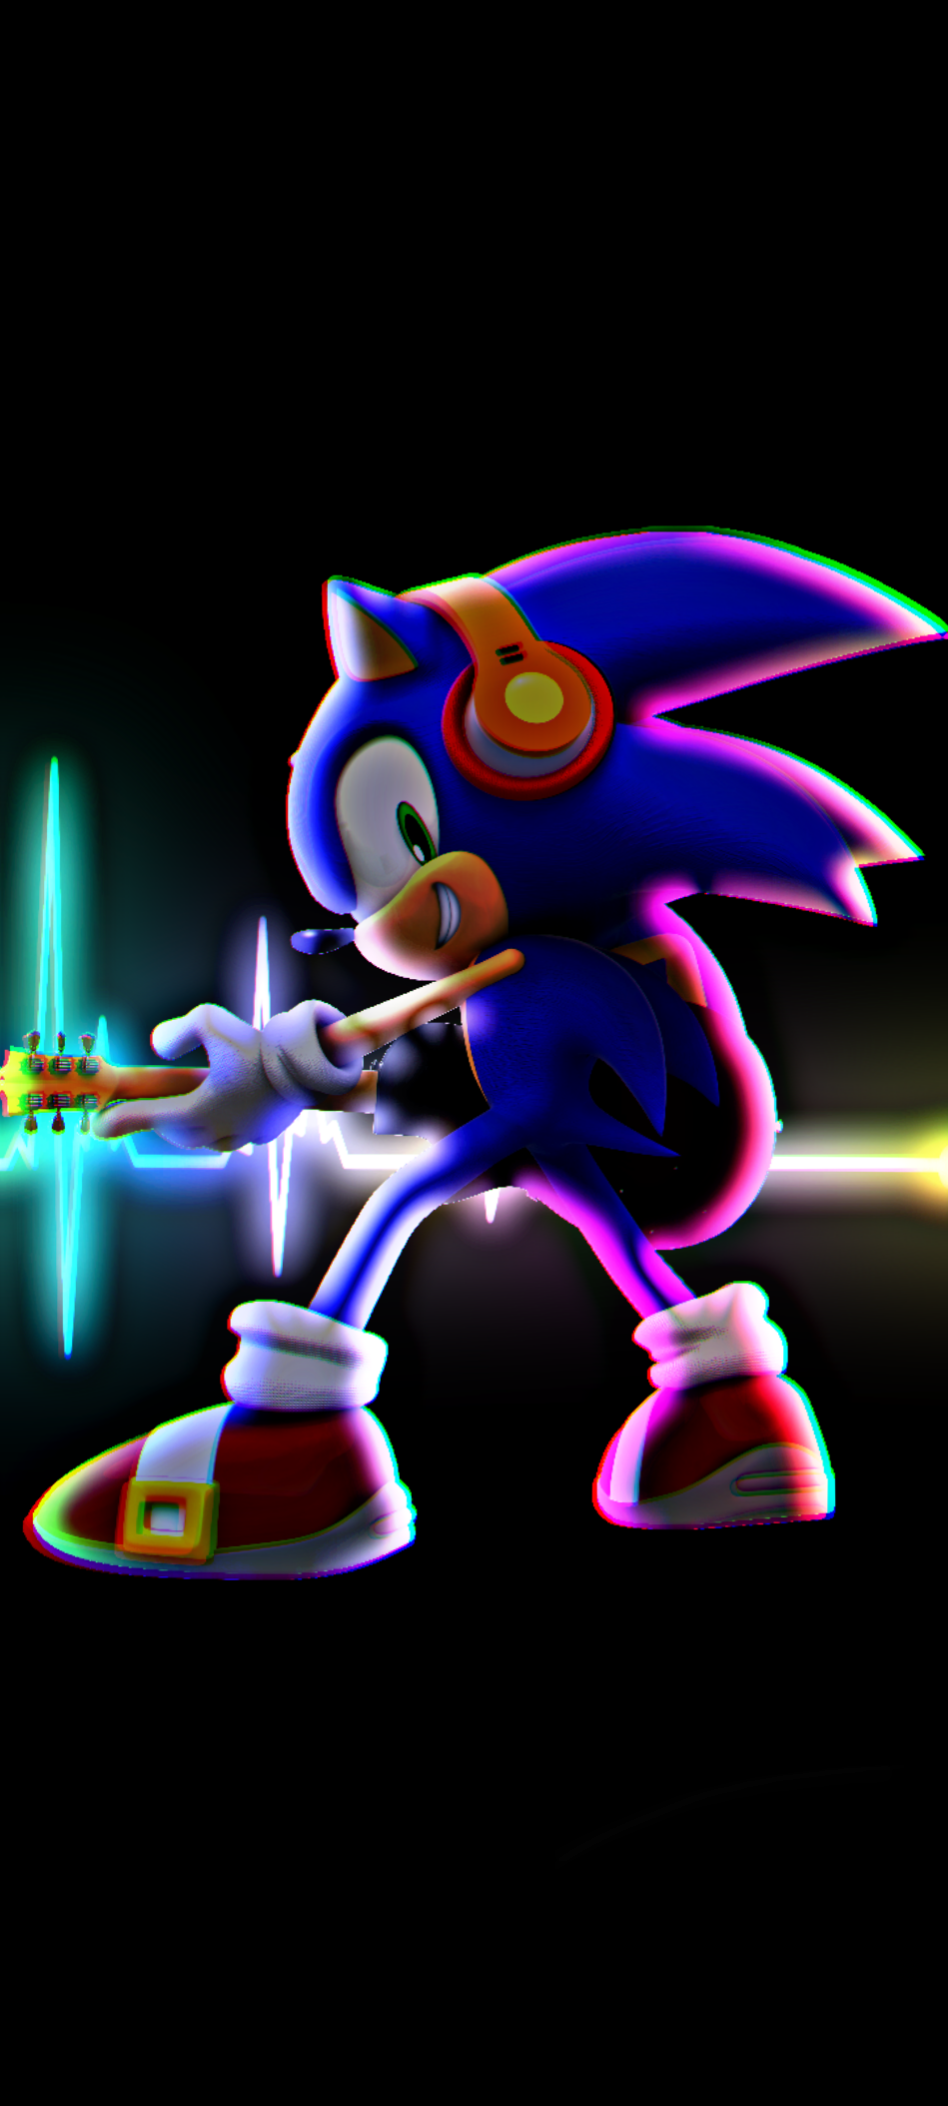 Modern Sonic - Sonic The Hedgehog Mobile Wallpaper by Jotasso on DeviantArt